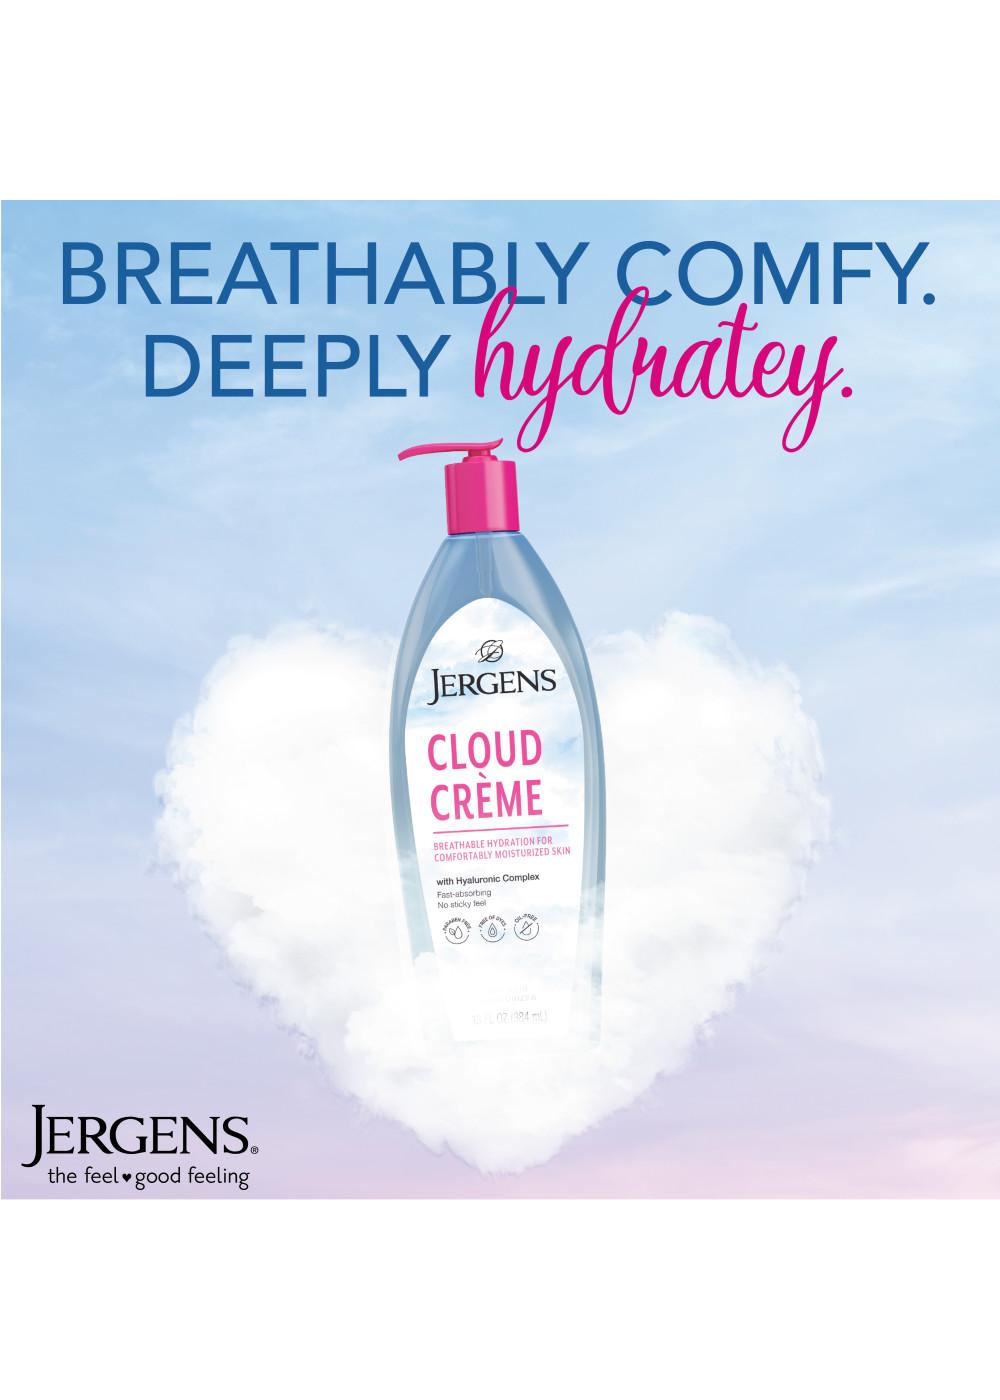 Jergens Cloud Creme Breathable Moisturizer; image 6 of 10